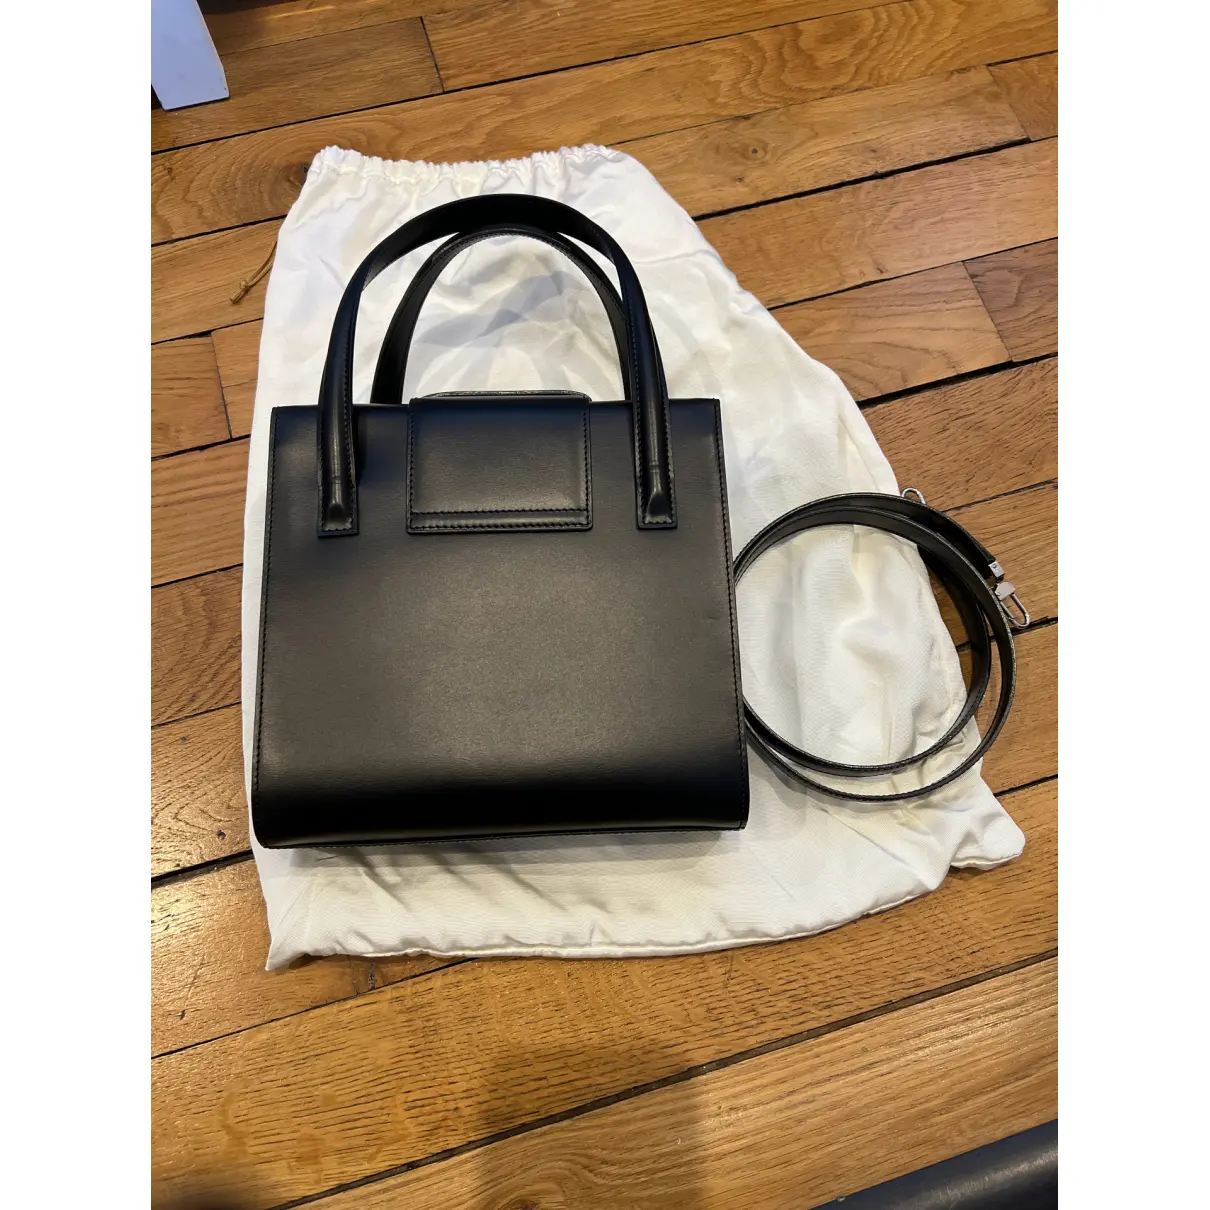 Buy Cartier Panthère leather handbag online